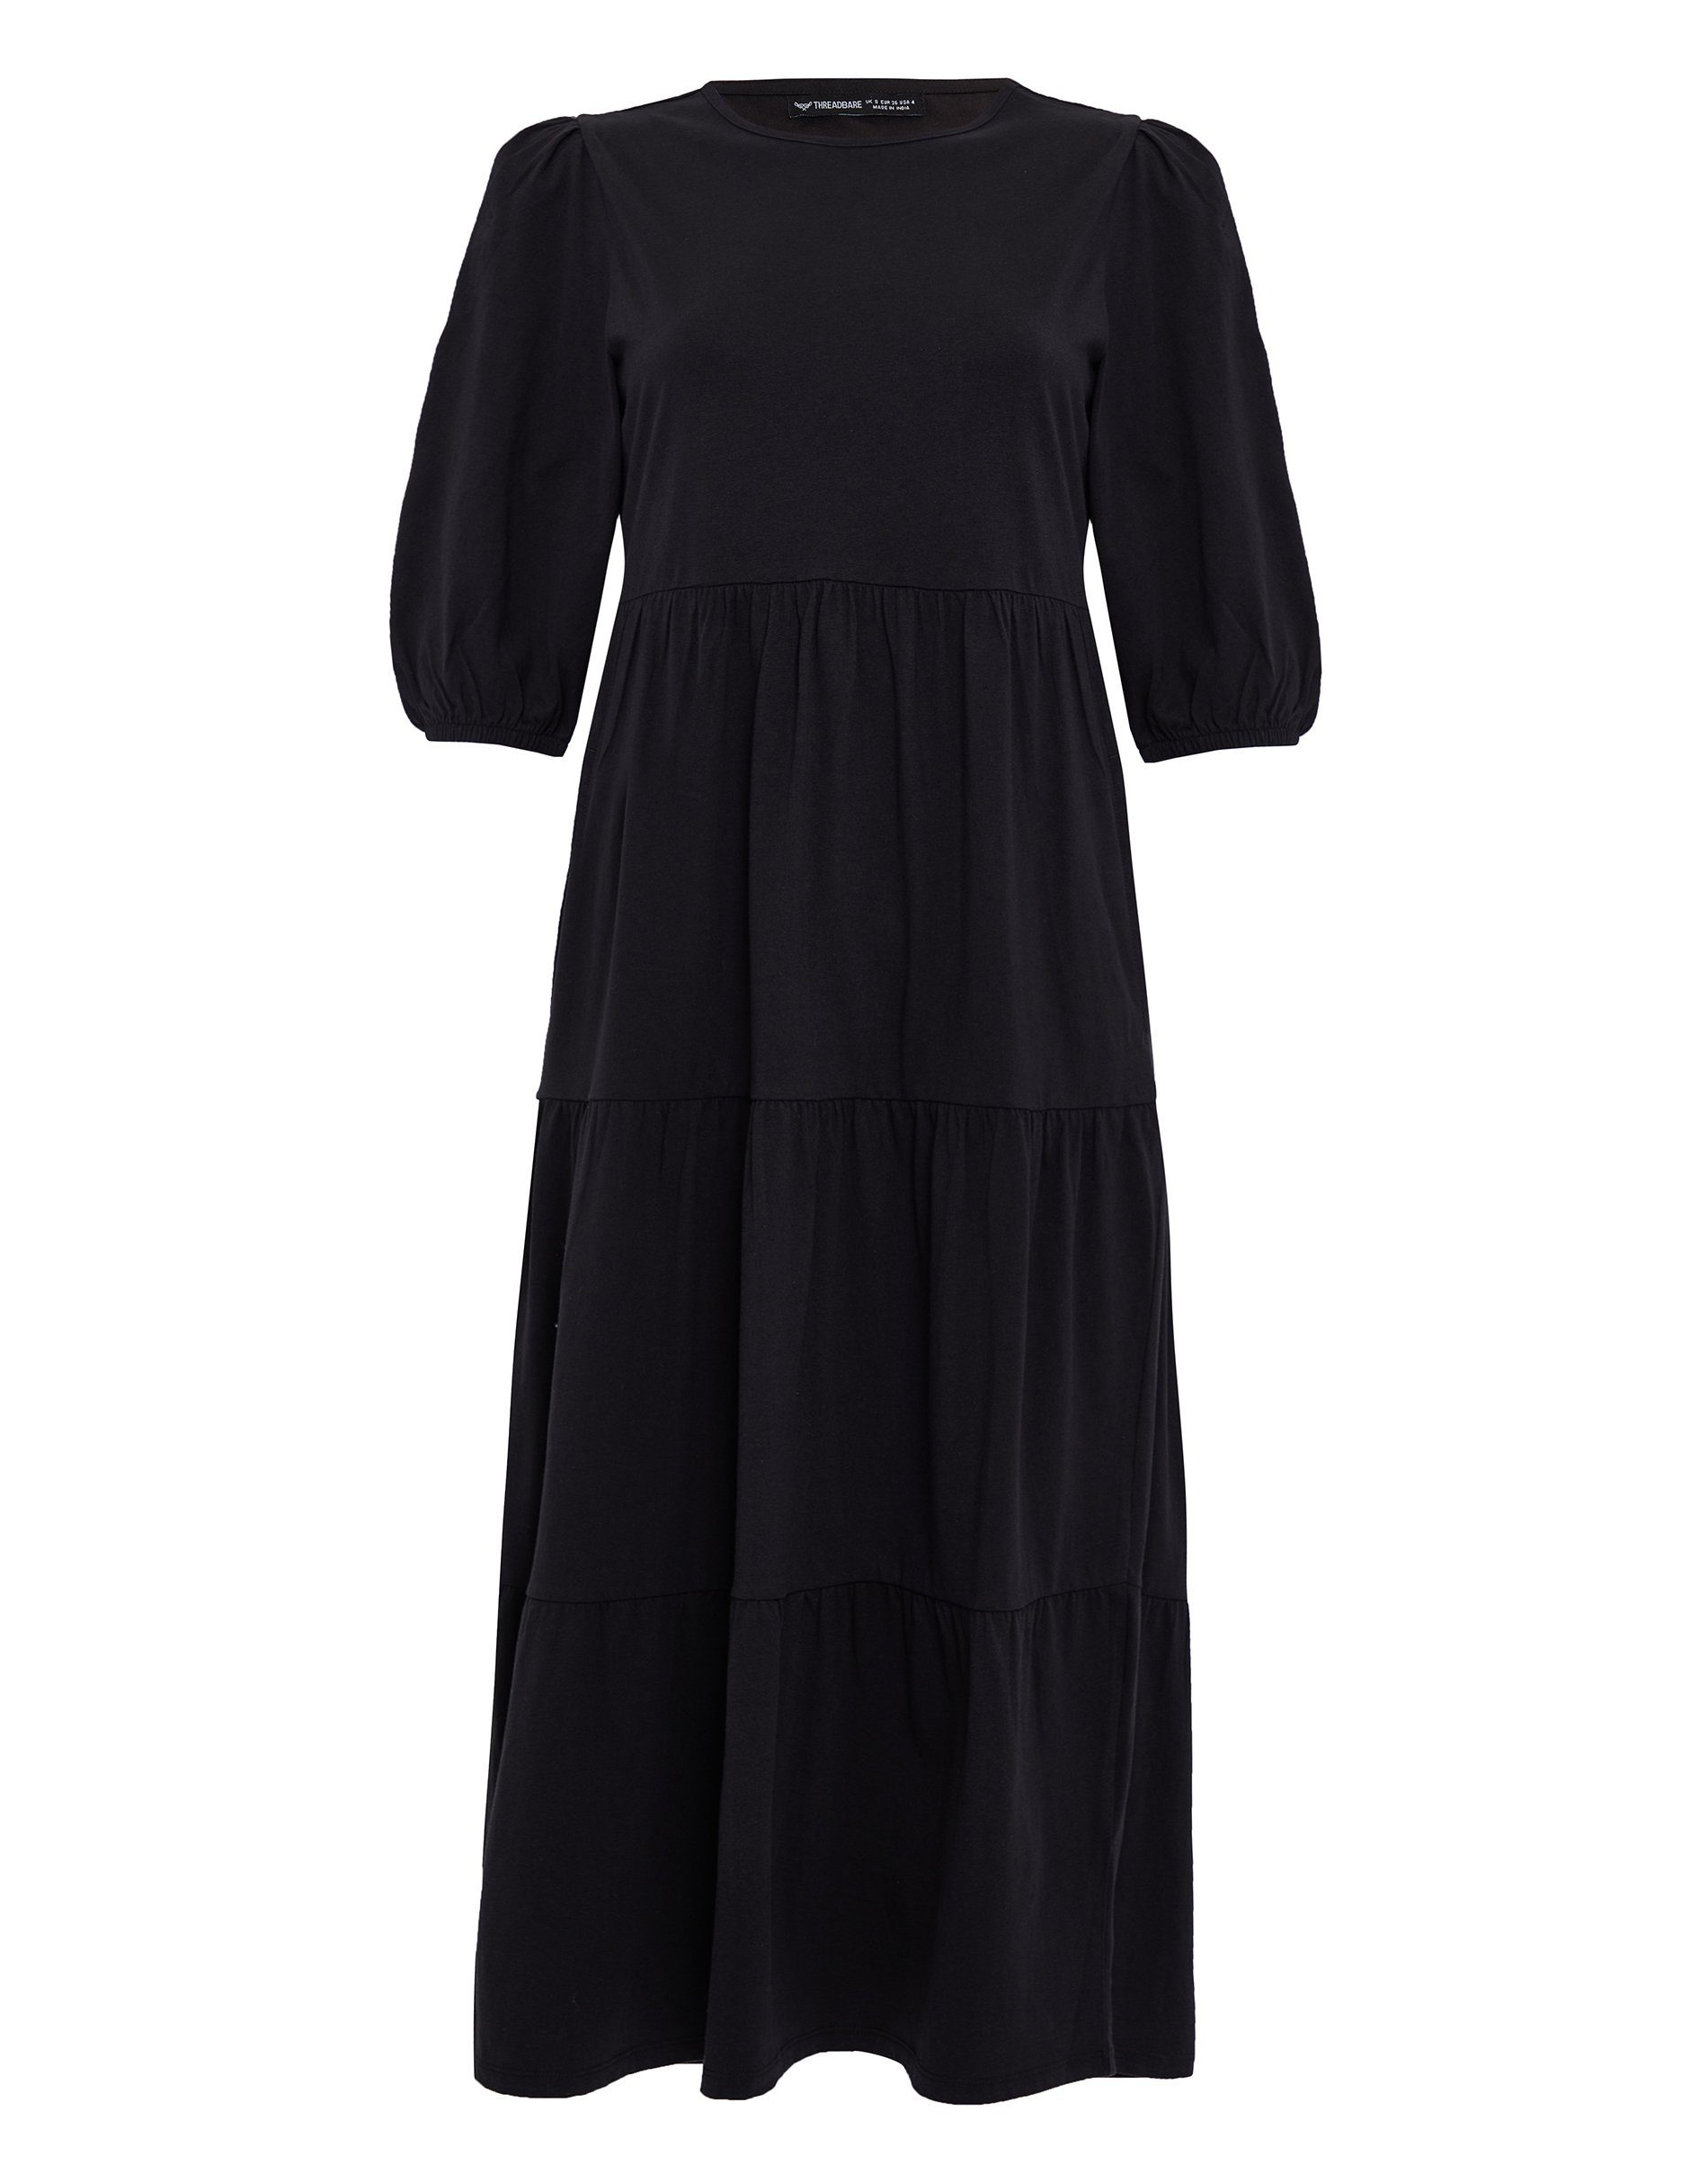 THB Dress Threadbare Black Tiered - Sommerkleid Midi schwarz Finn